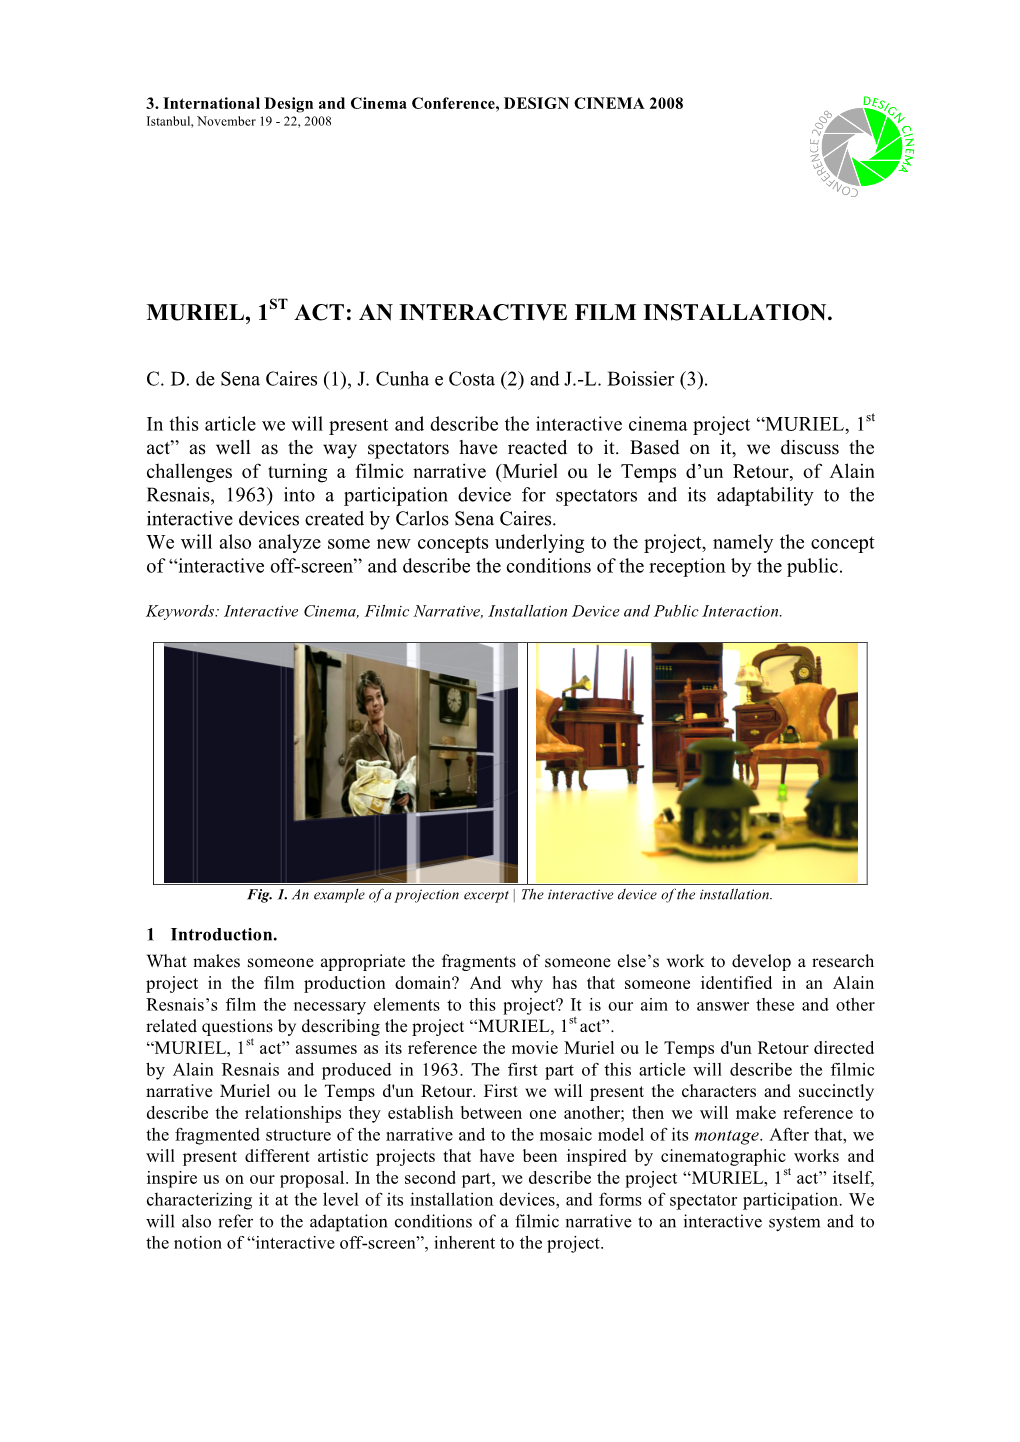 Muriel, 1St Act: an Interactive Film Installation